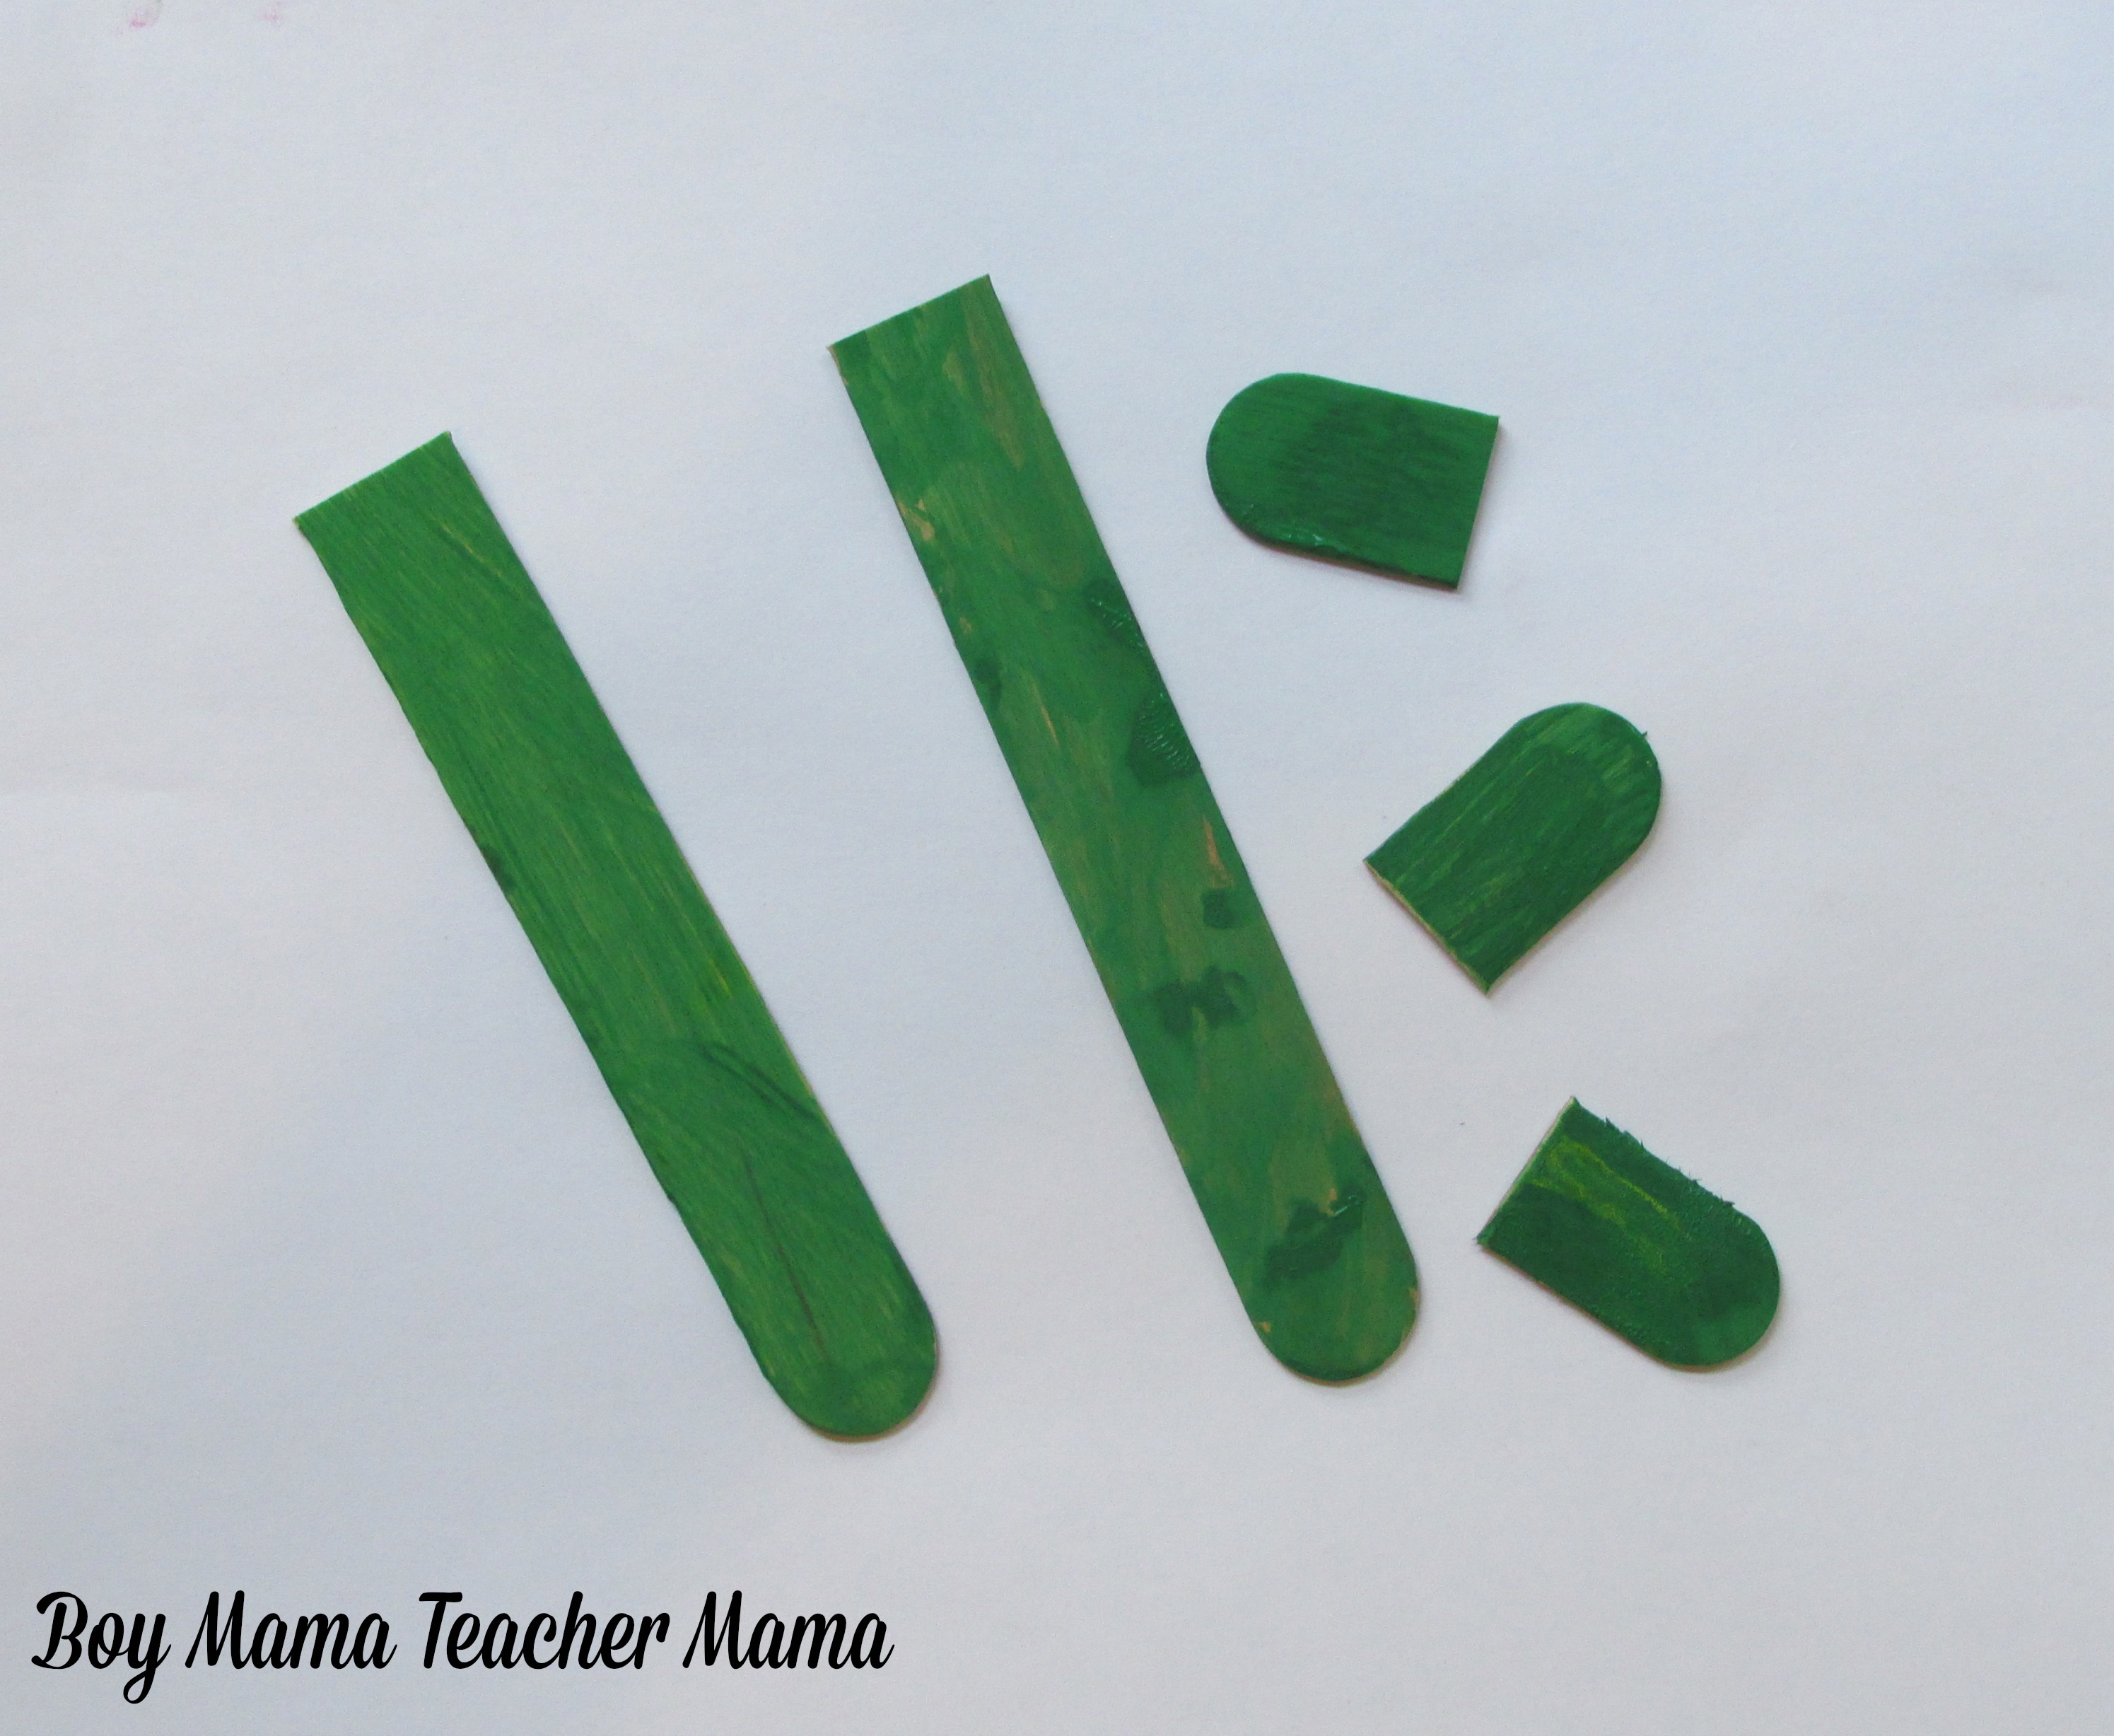 Boy Mama: Egg Carton and Popsicle Stick Flowers - Boy Mama Teacher